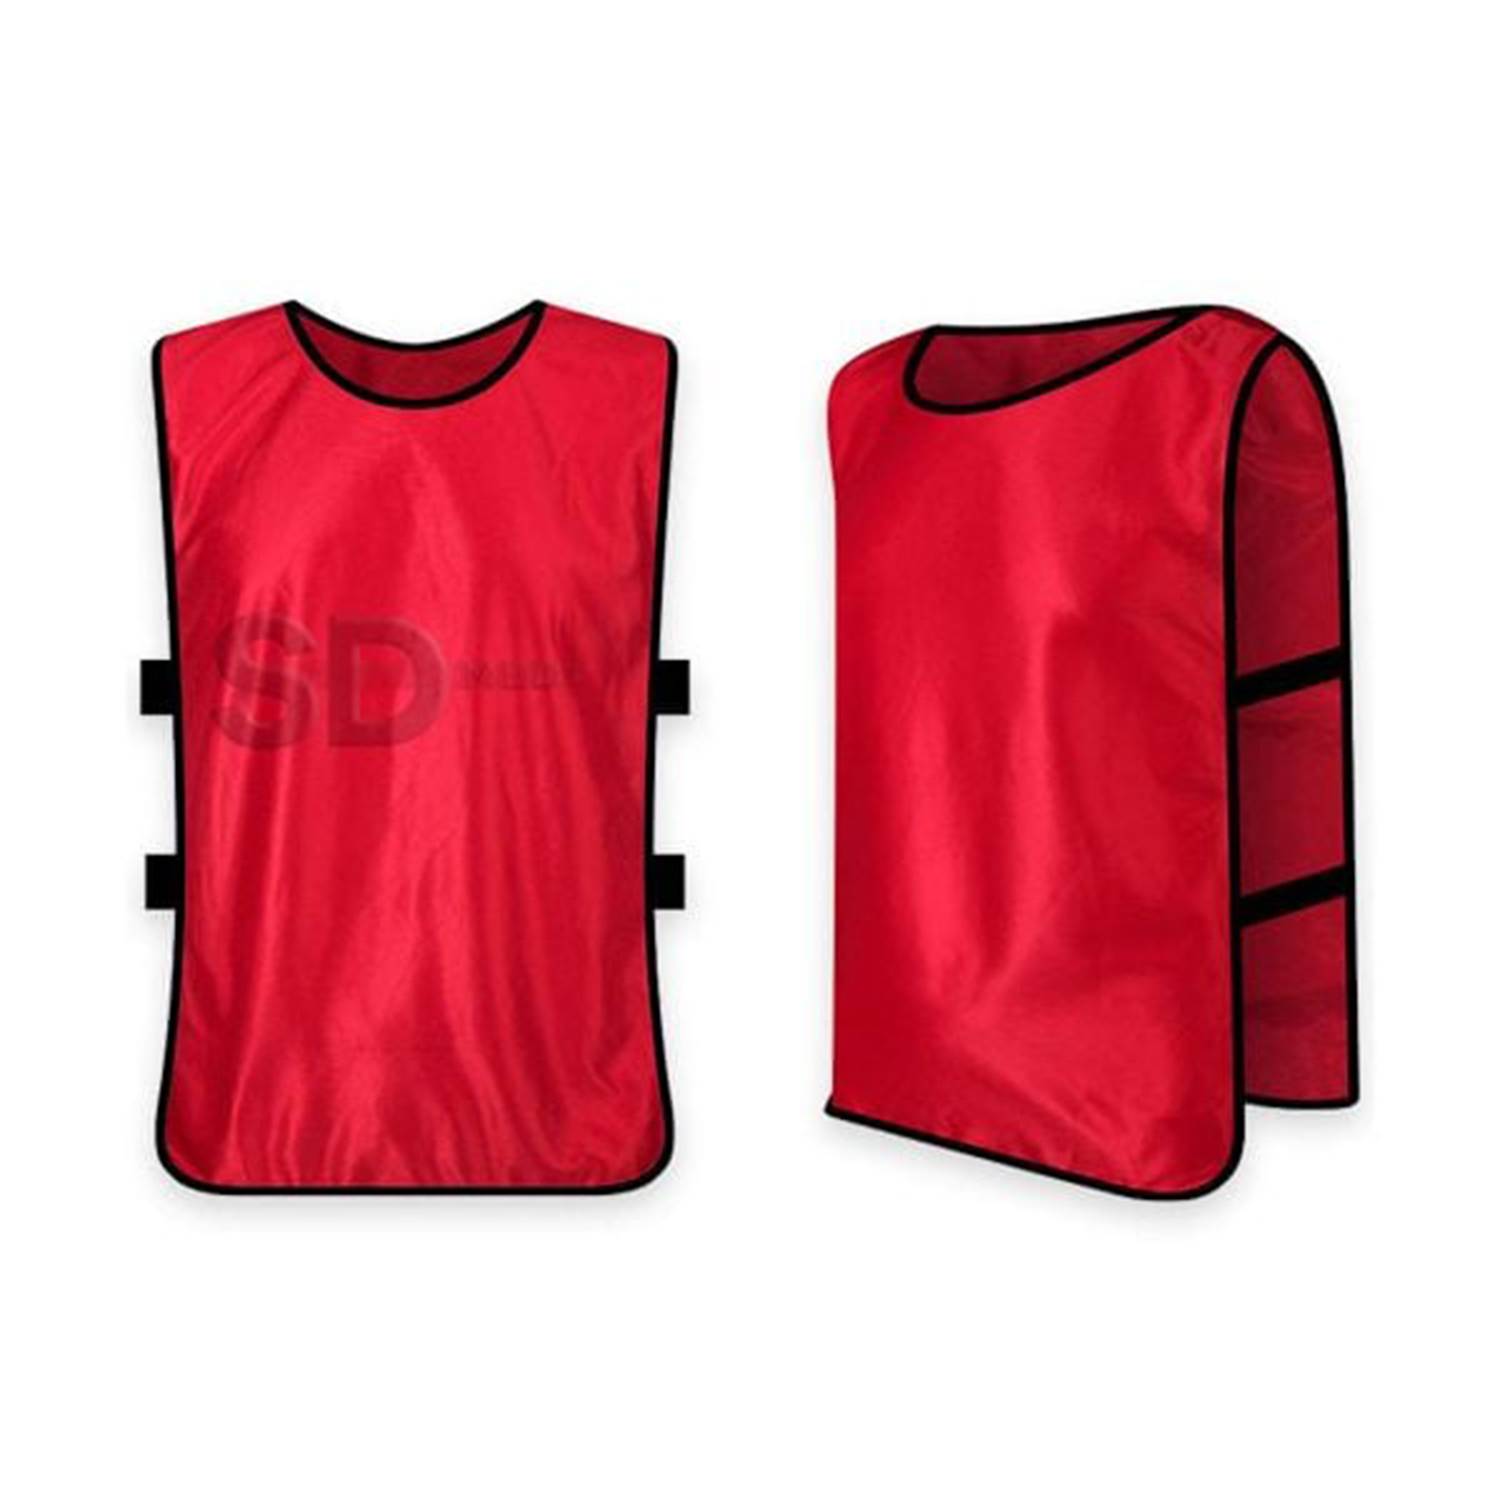 SDFIT Petos Deportivos Color Rojo Pack de 12